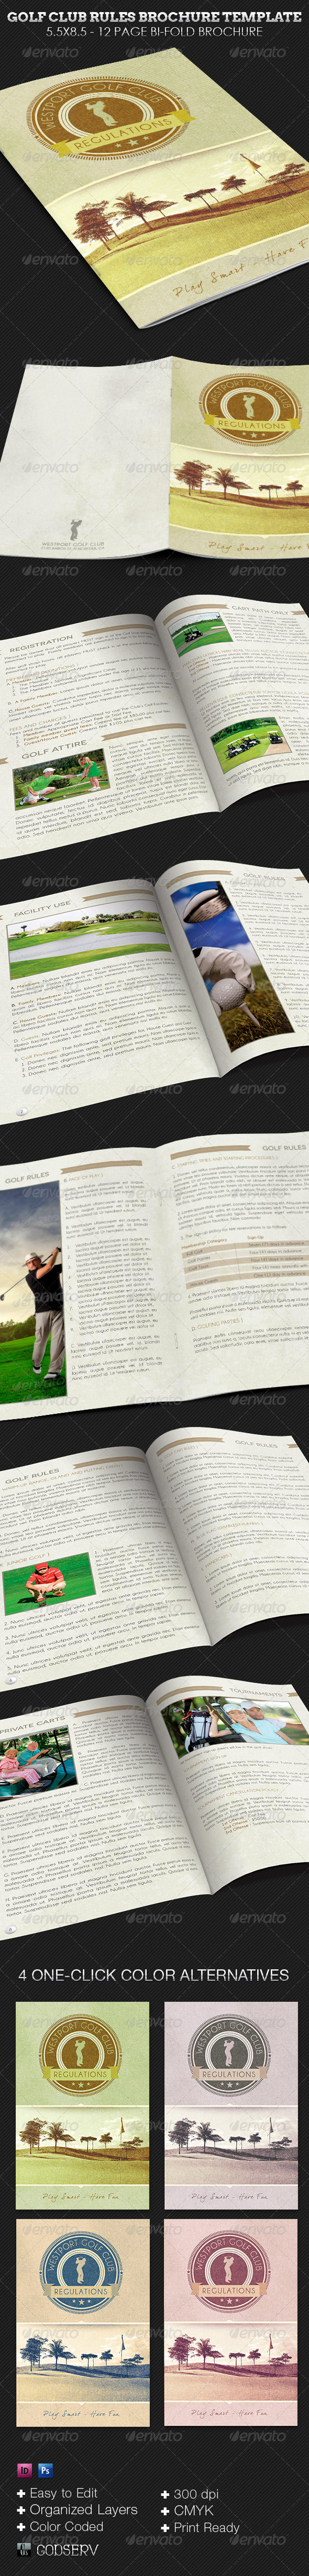 Golf Club Rules Brochure Template